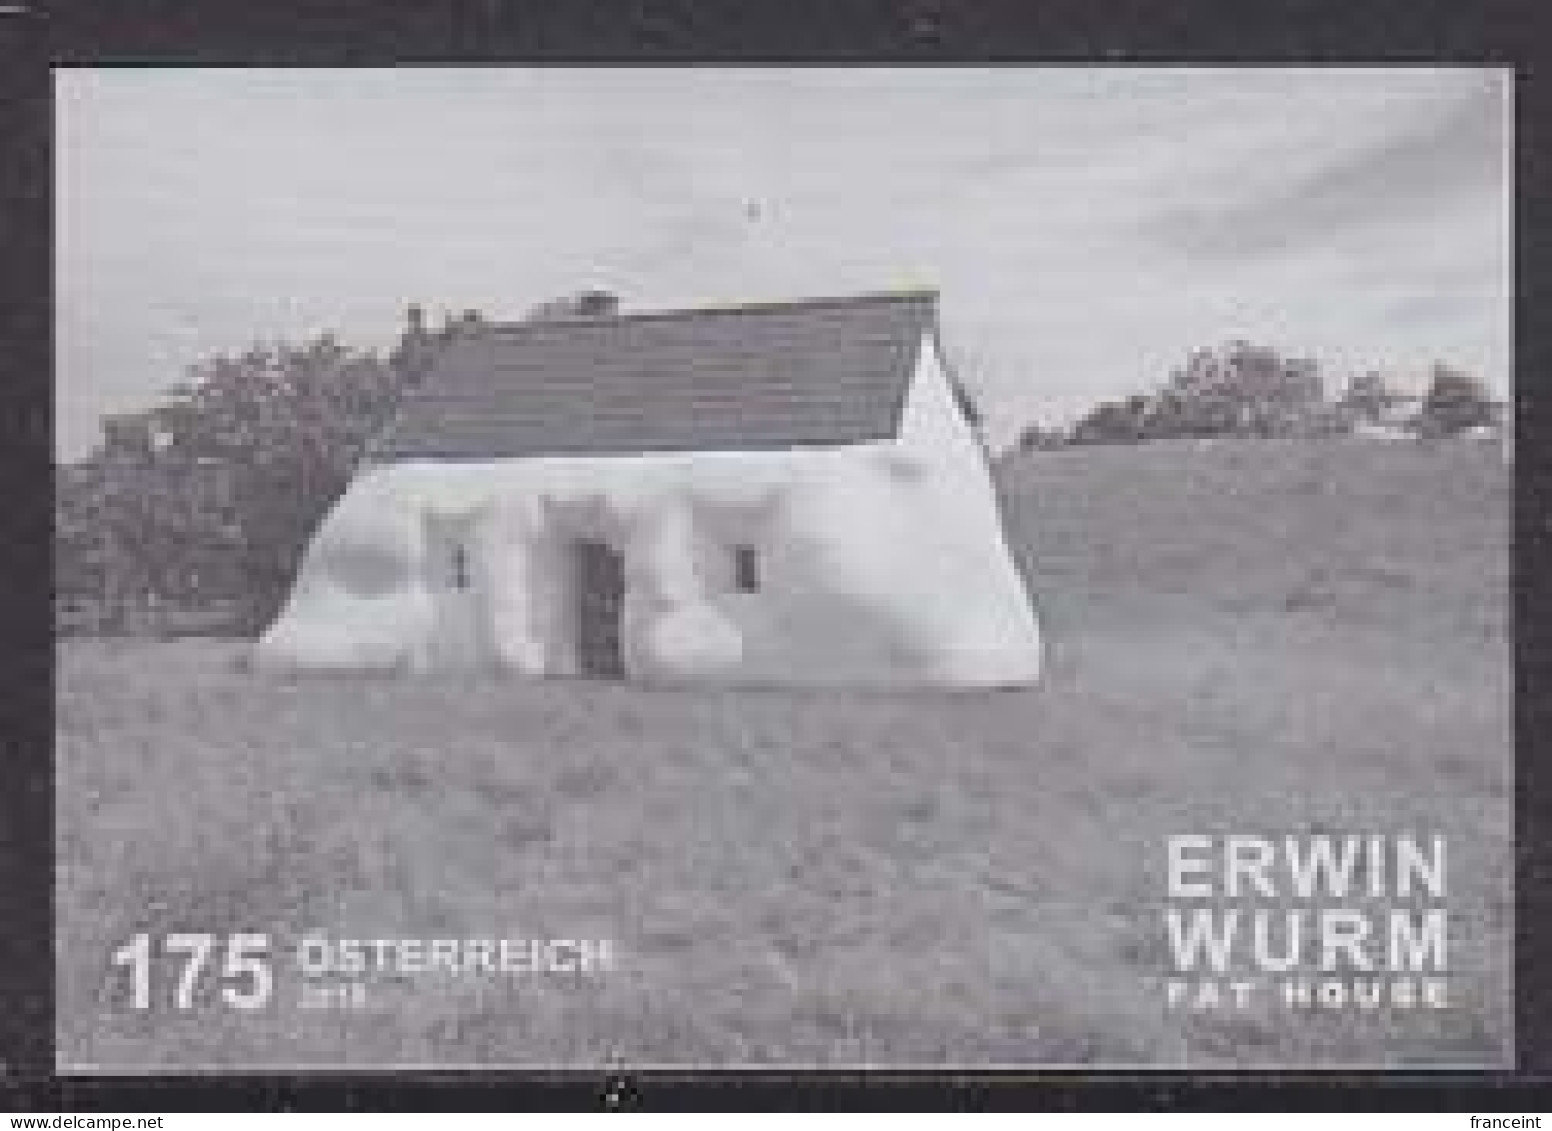 AUSTRIA(2019) Erwin Wurm's "Fat House". Black Print. - Proofs & Reprints